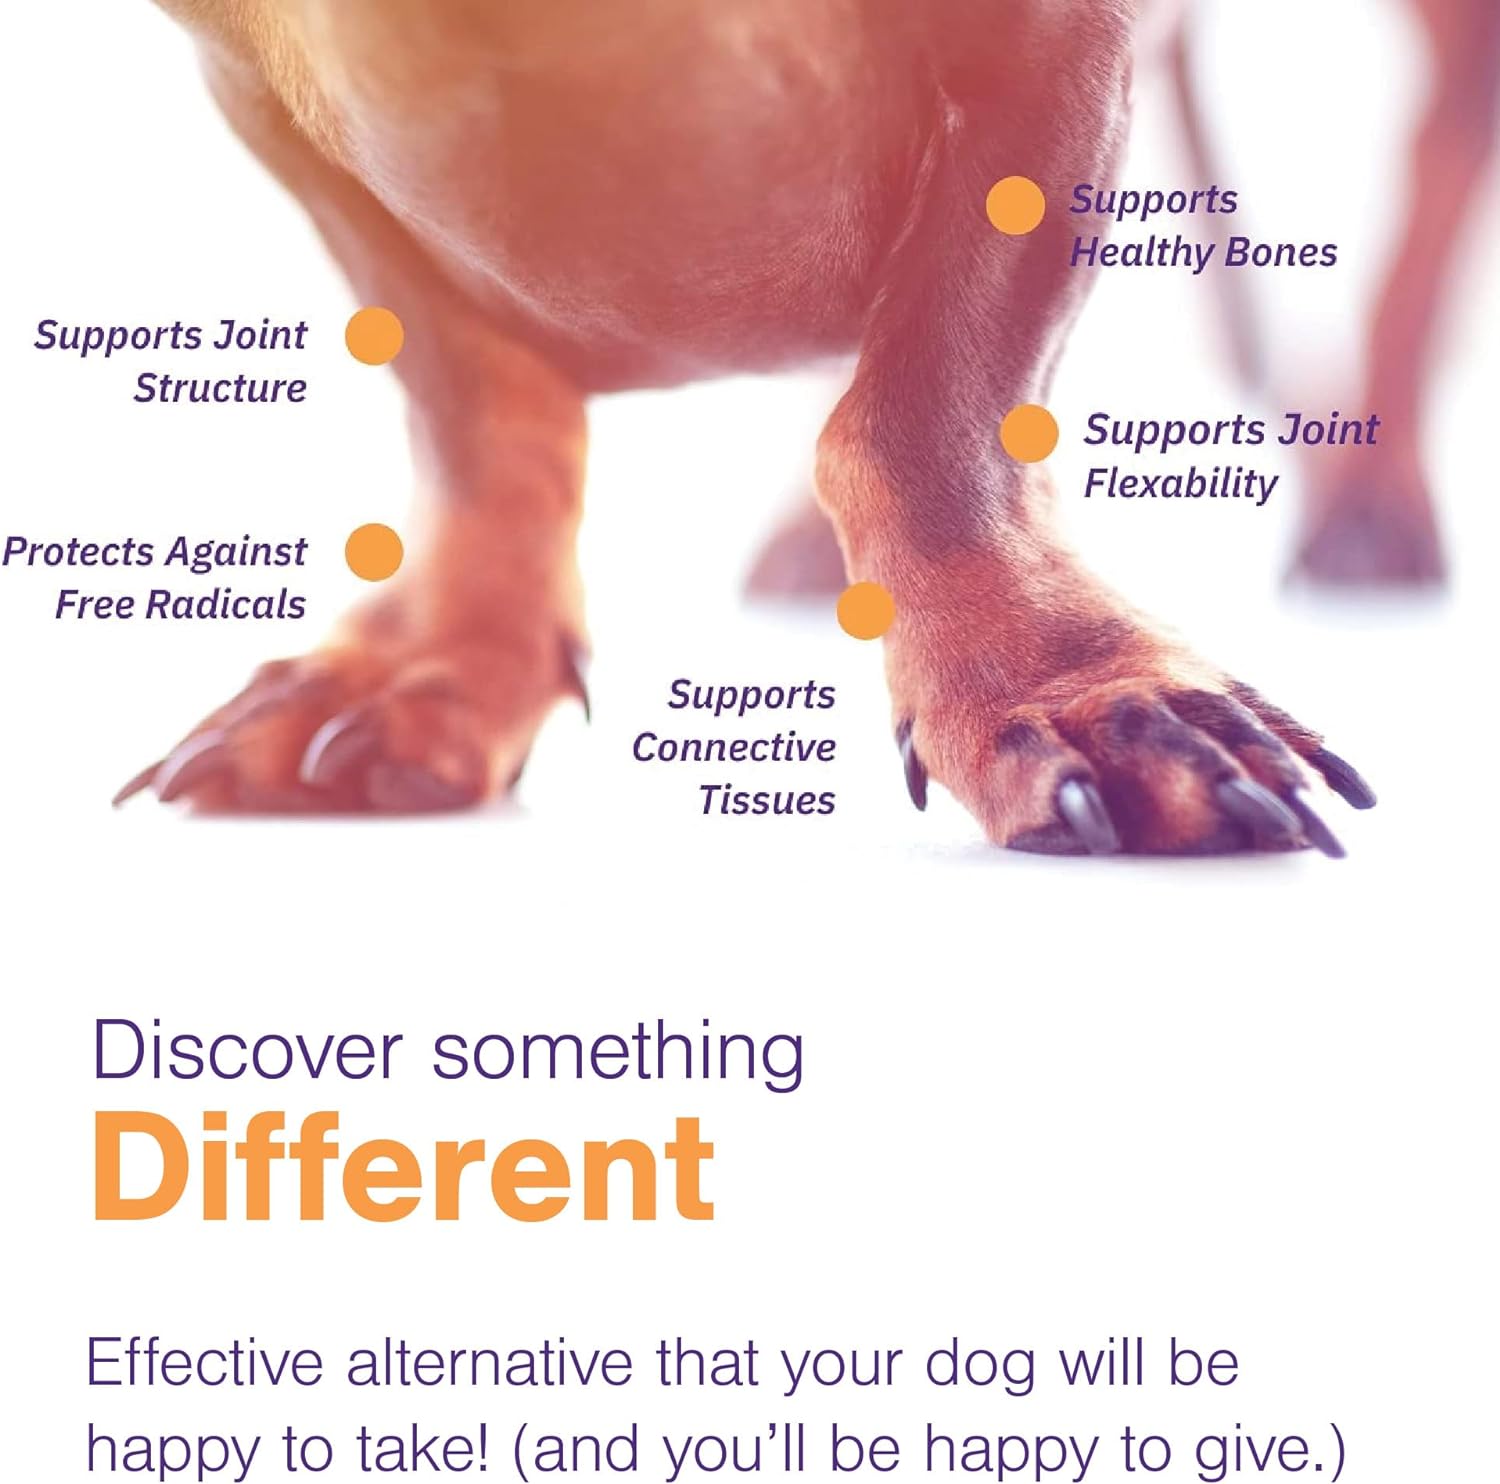 MoVoFlex Joint Support Supplement for Dogs - Hip and Joint Support - Dog Joint Supplement - Hip and Joint Supplement Dogs - 120 Soft Chews for Small Dogs (by Virbac) : Pet Supplies